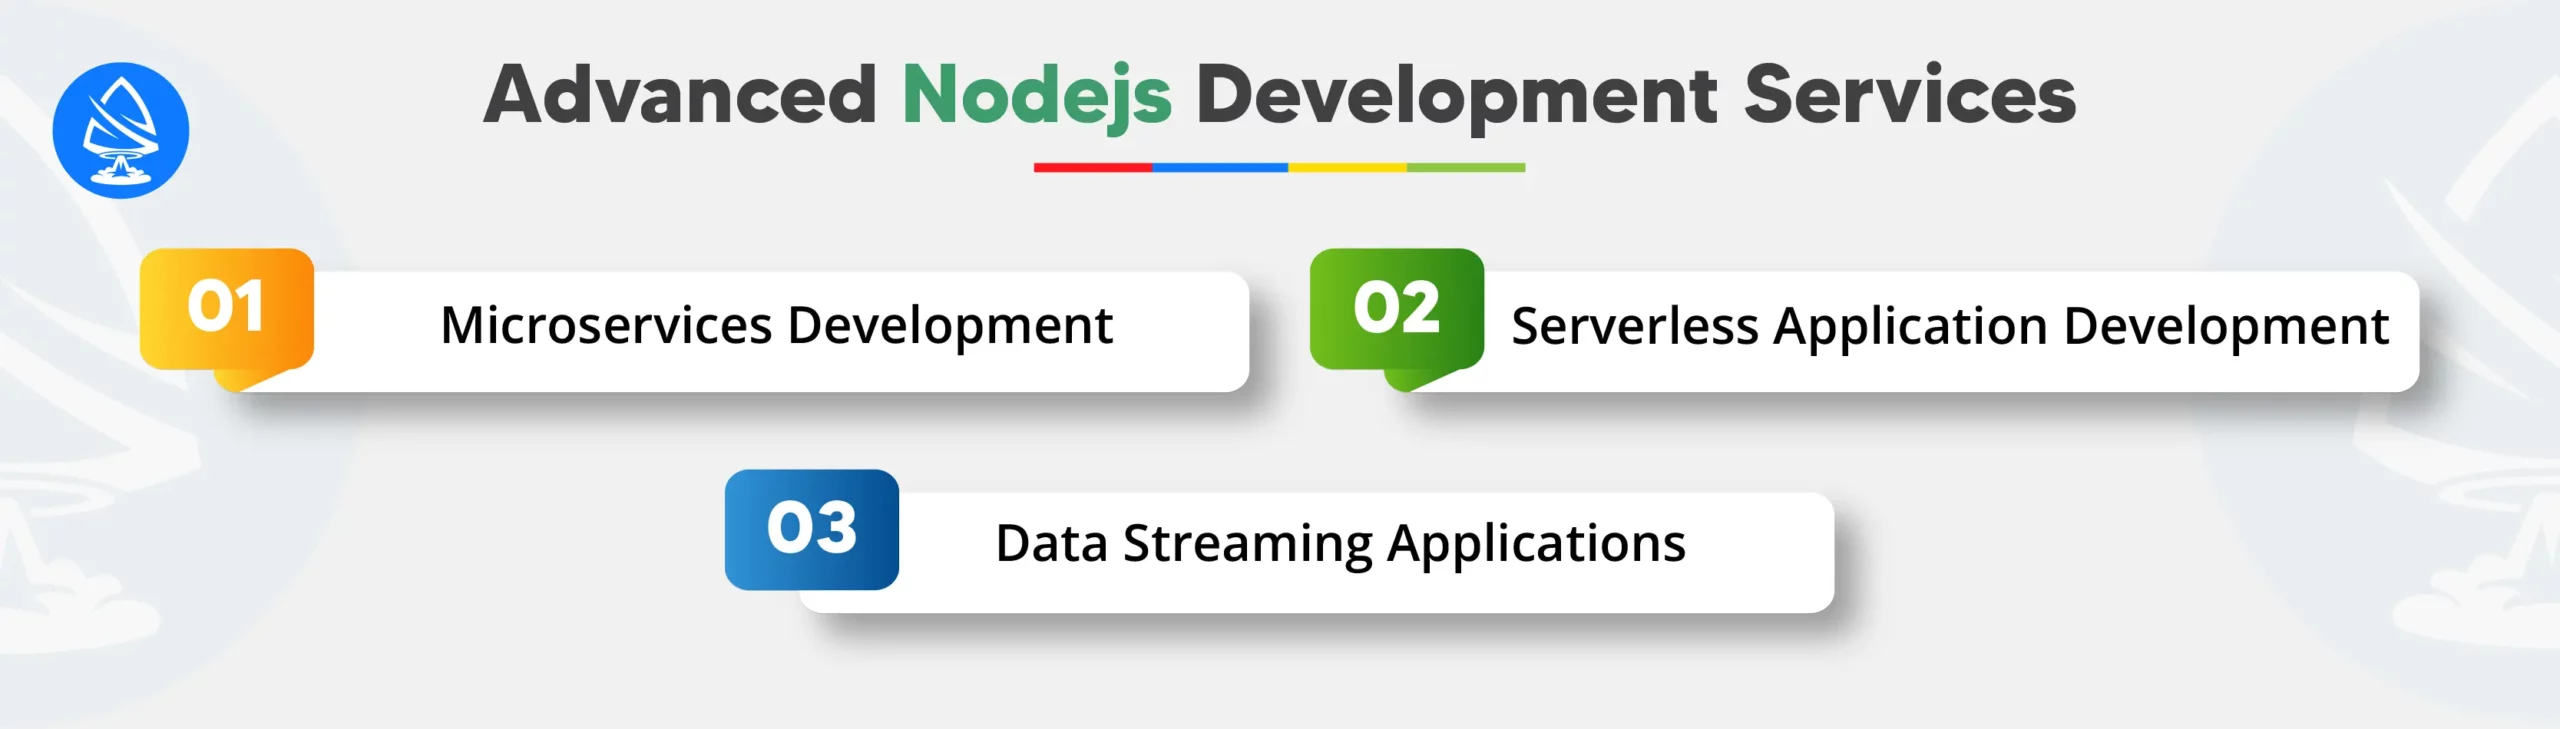 2. Advanced Node.js Development Services 